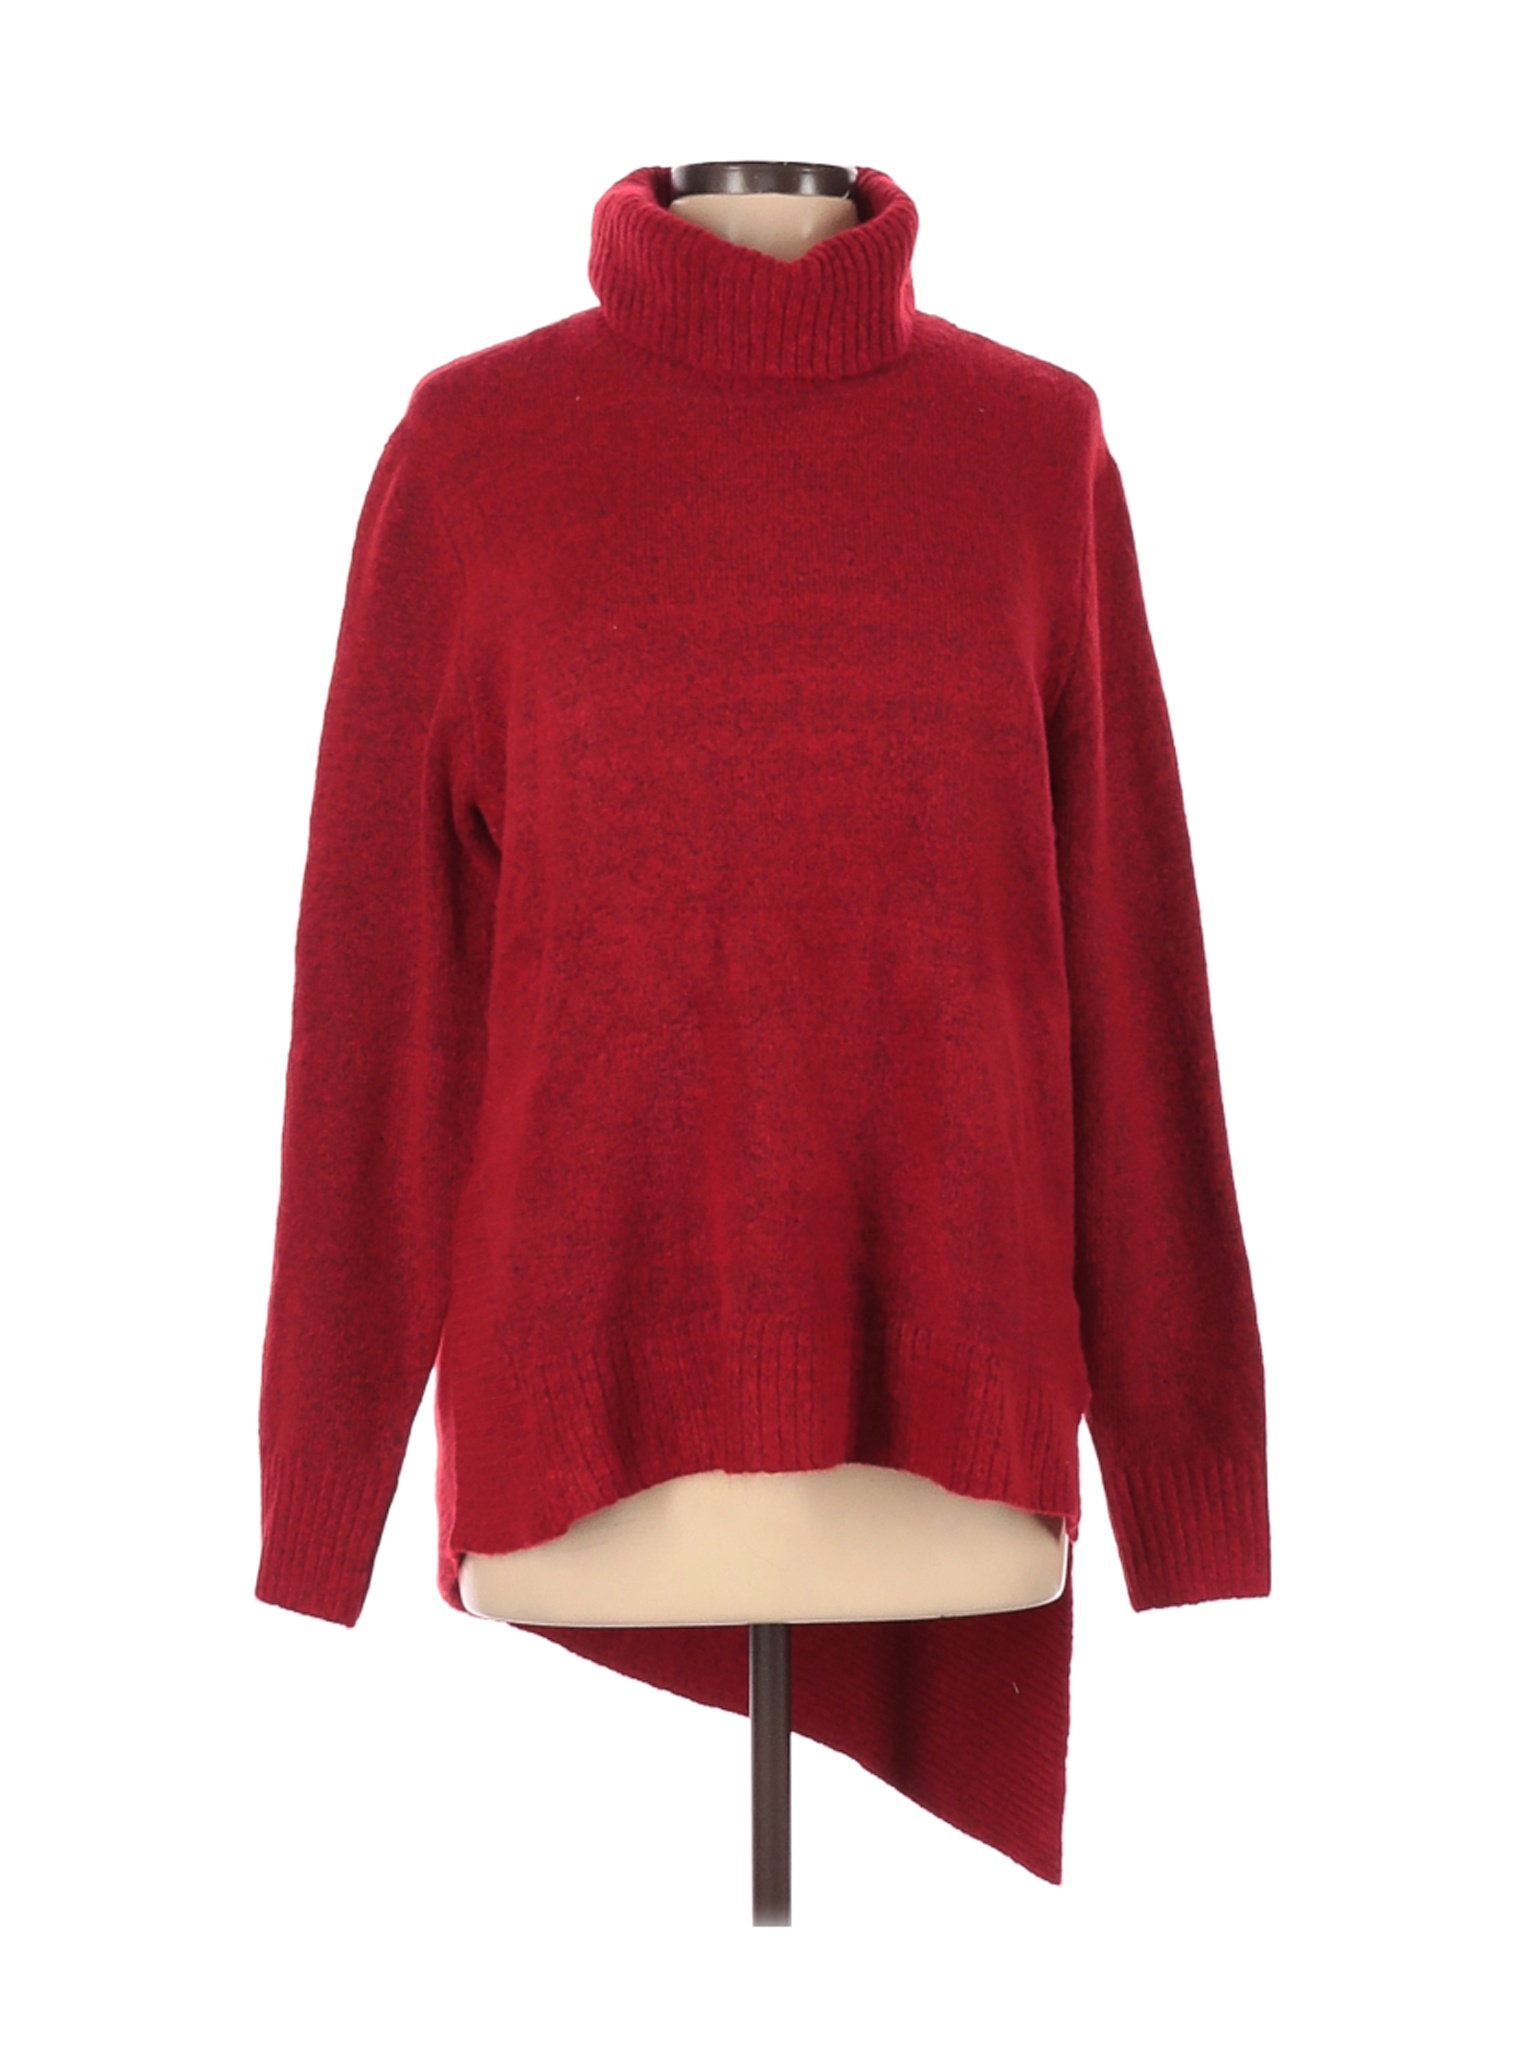 New Directions Women Red Turtleneck Sweater L | eBay